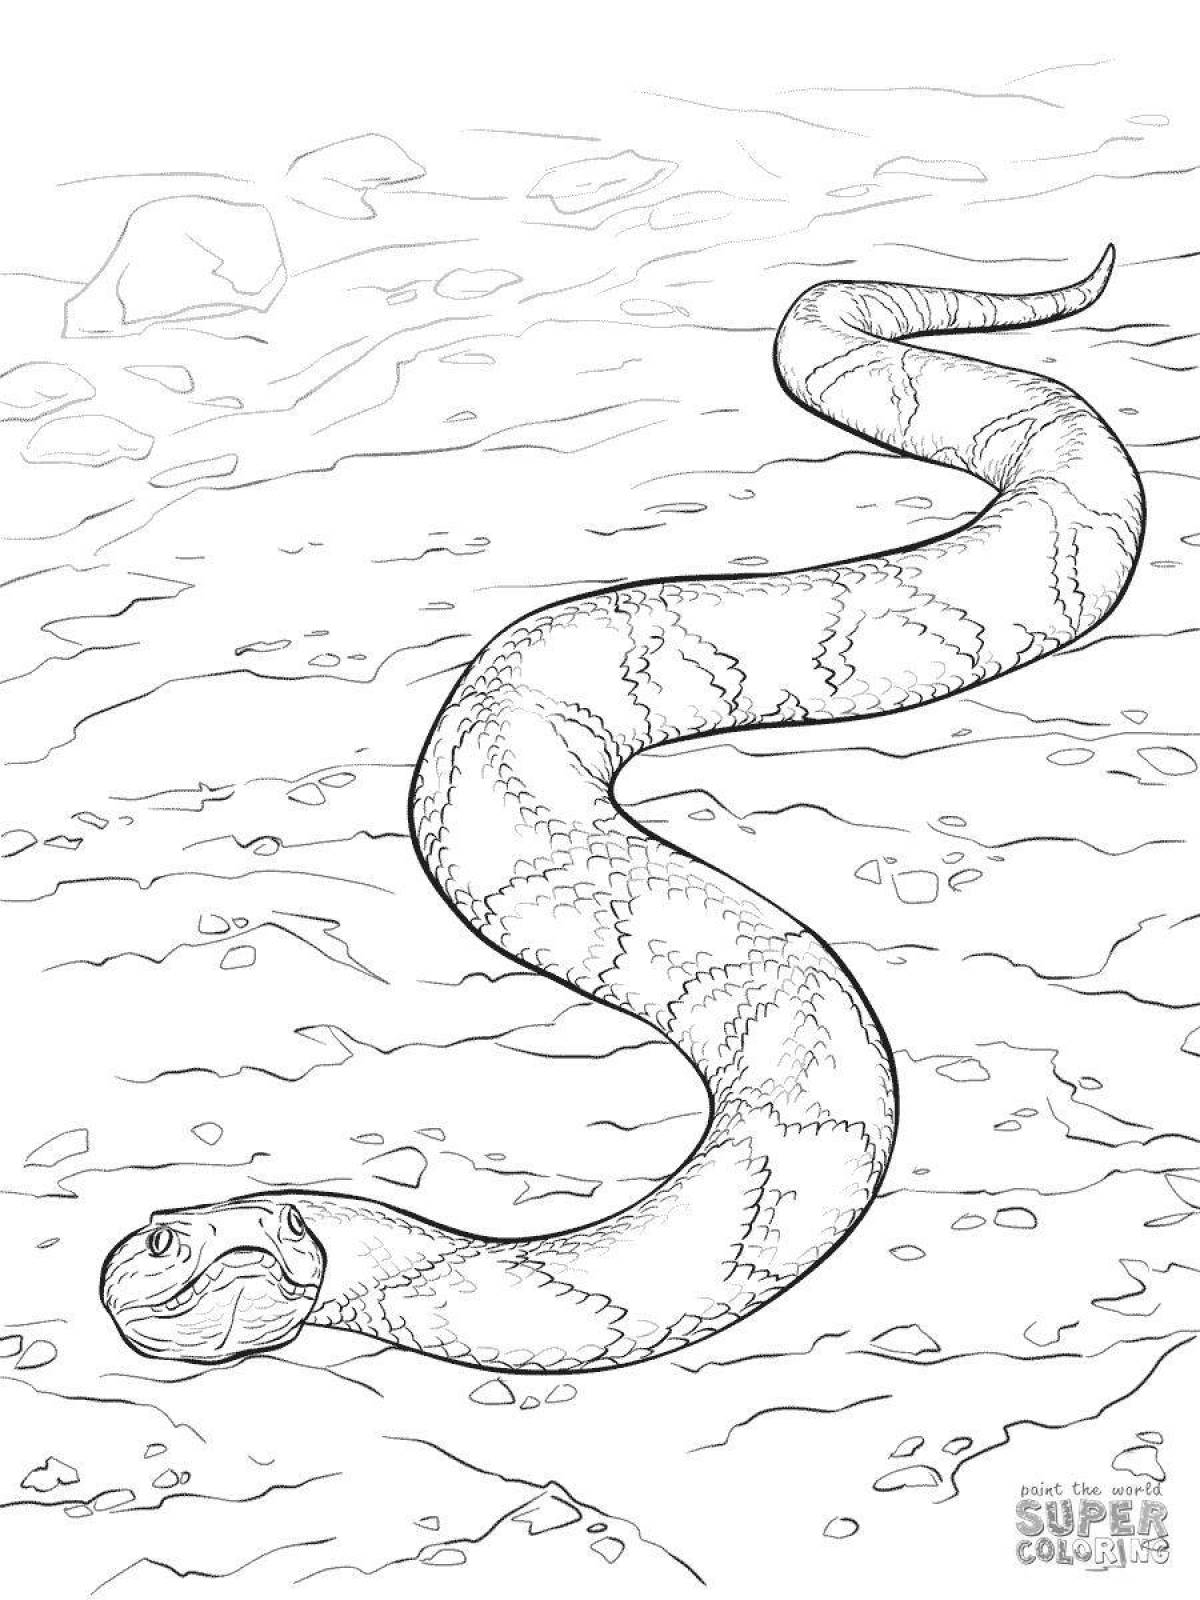 Coloring page elegant viper